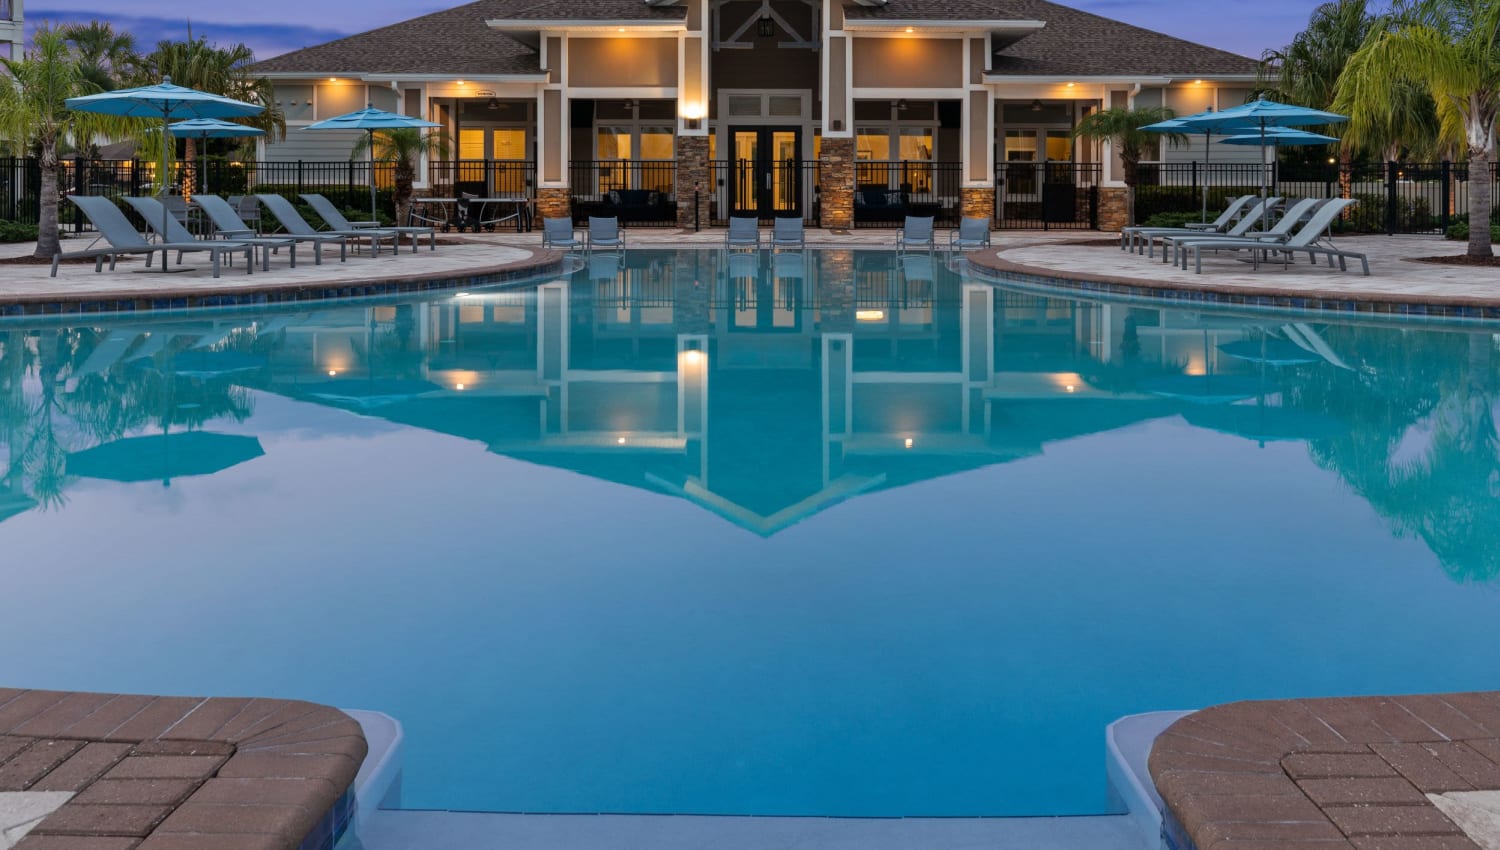  Resort style swimming pool at Lakeline at Bartram Park in Jacksonville, Florida